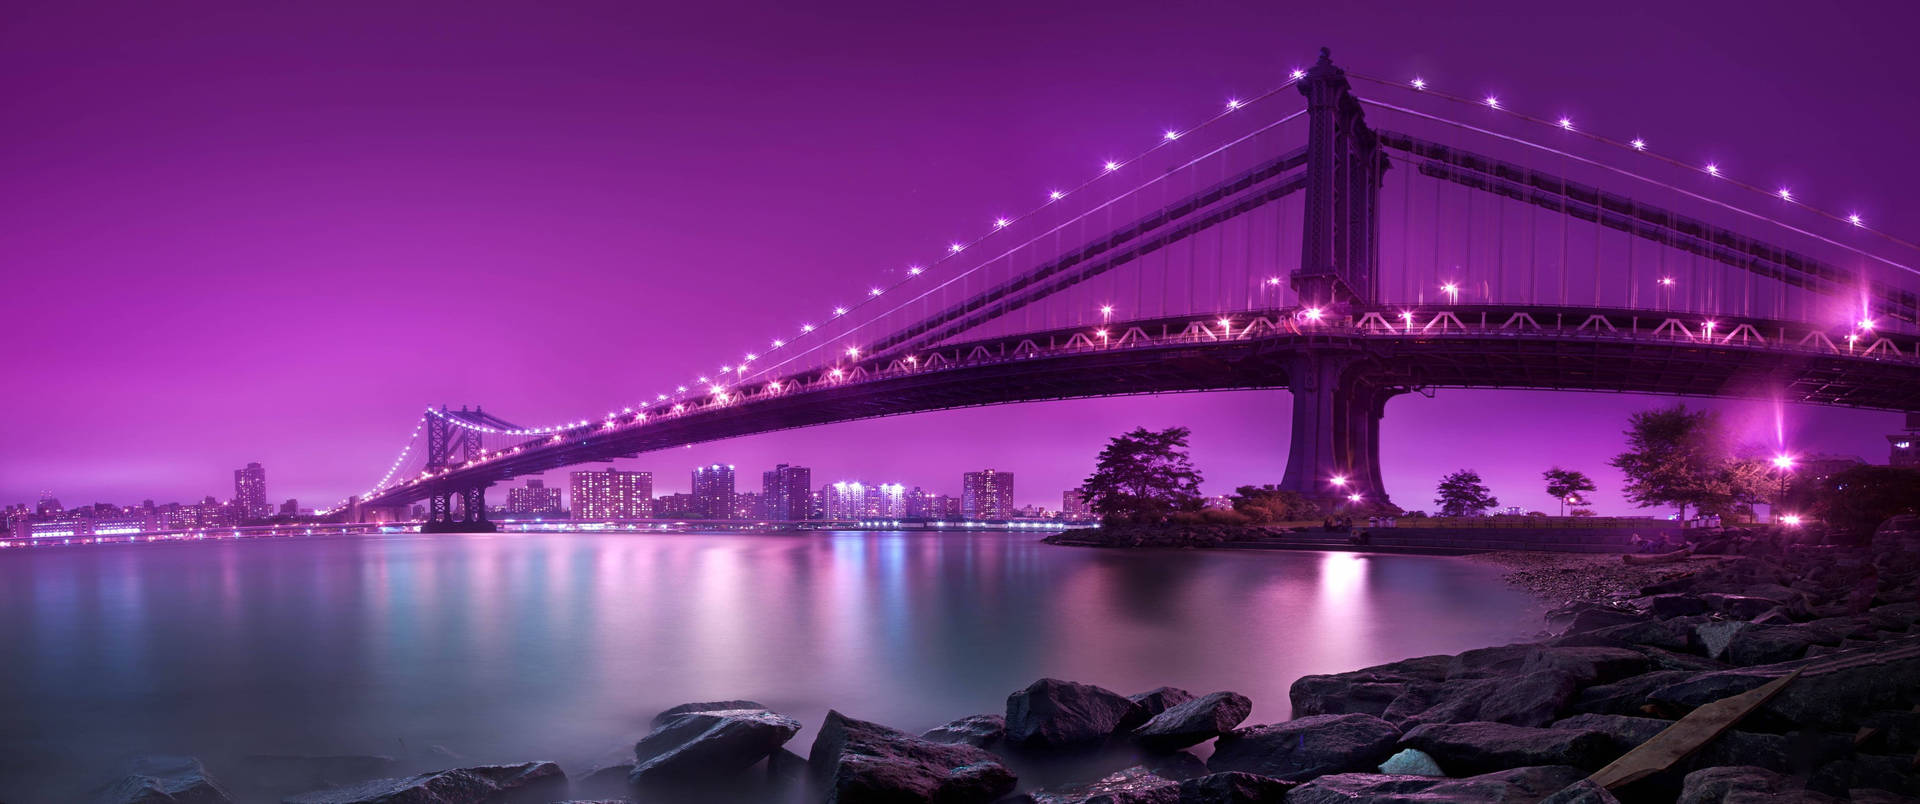 Breathtaking Ultra Wide 4k View Of A Purple Illuminated Bridge